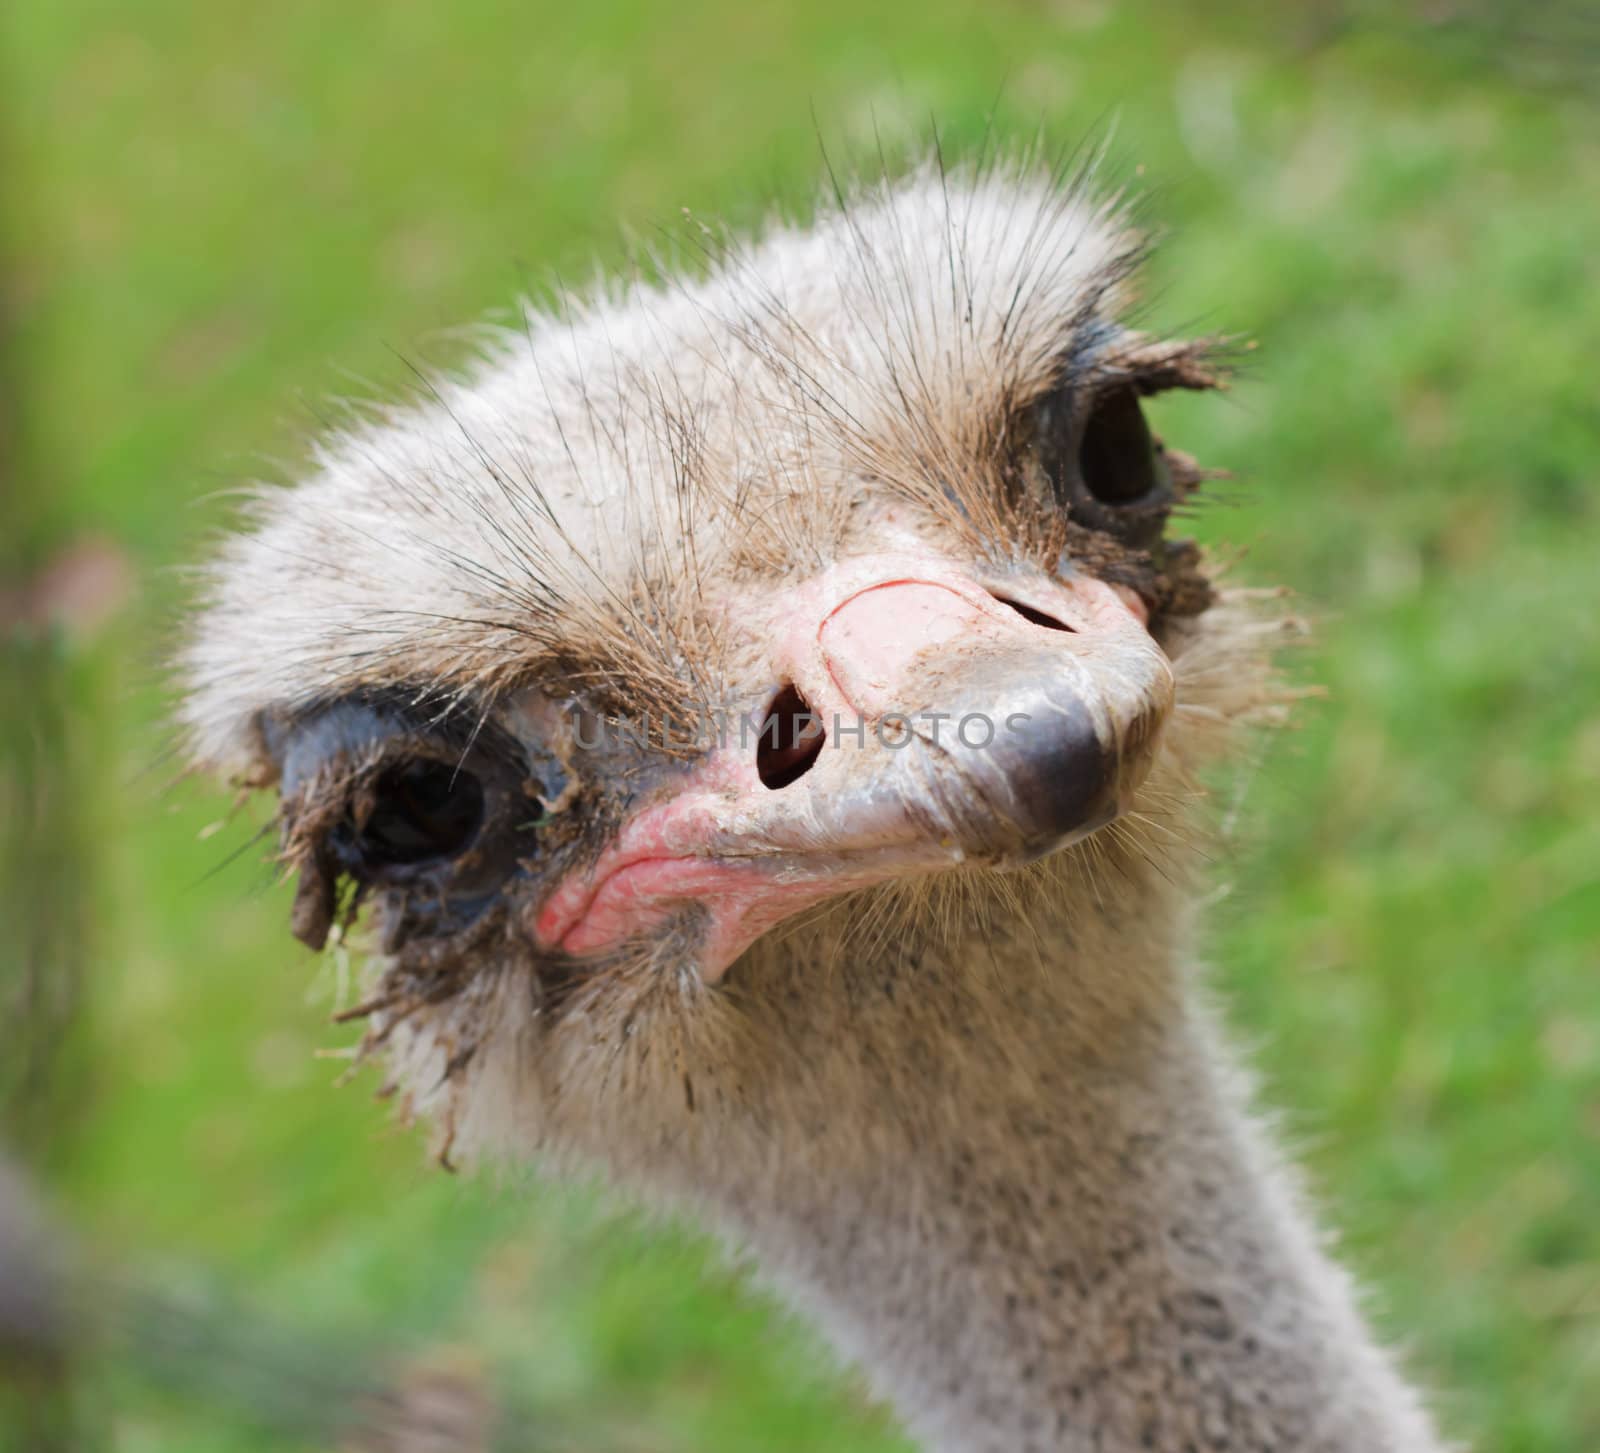 Ostrich head side view over blur green sunny background by schankz